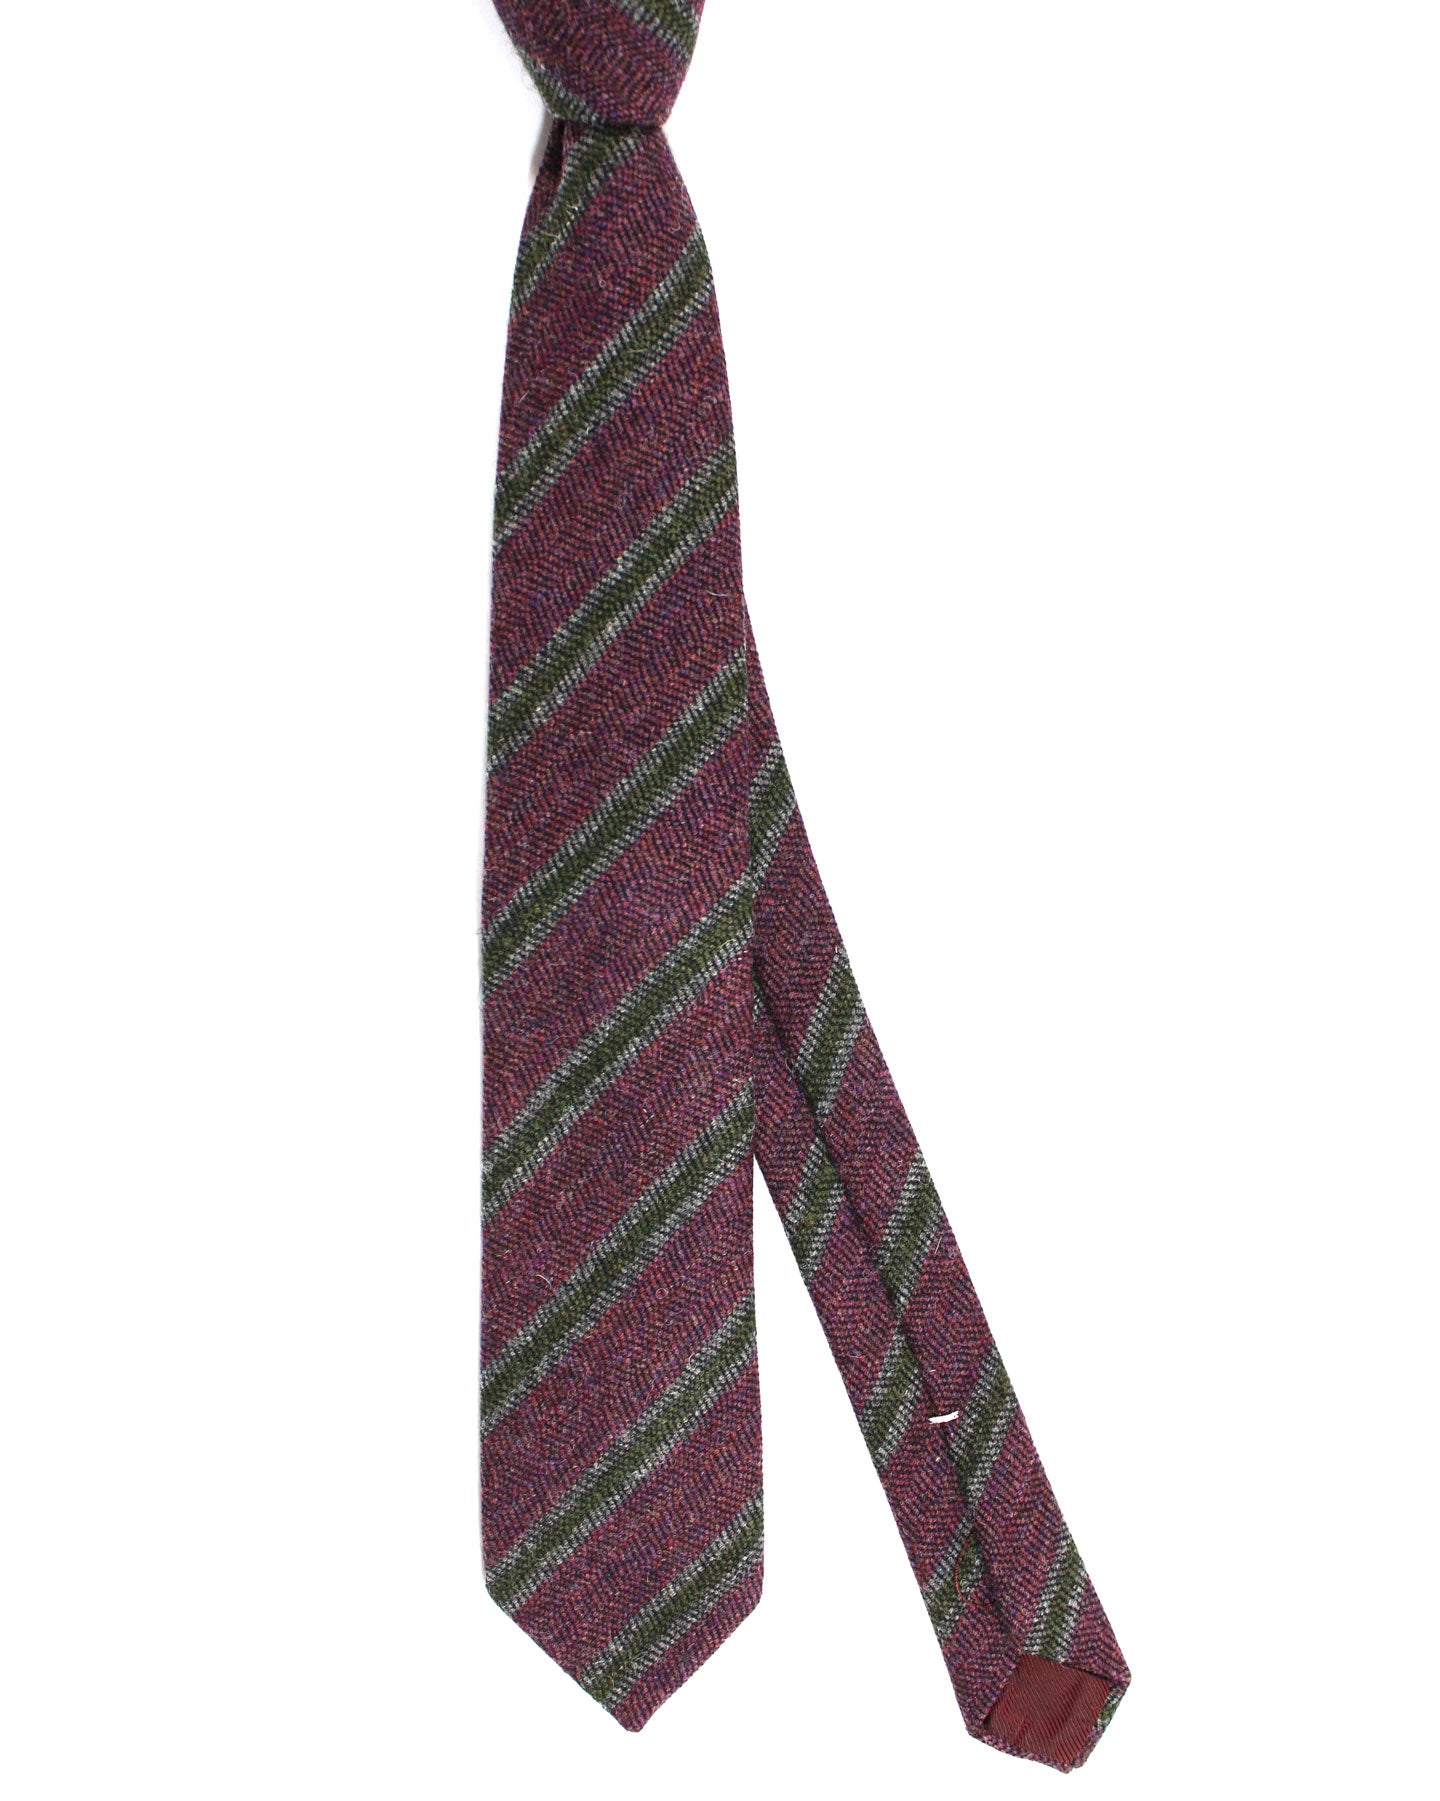 Luigi Borrelli Unlined Tie Bordeaux Gray Stripes Design